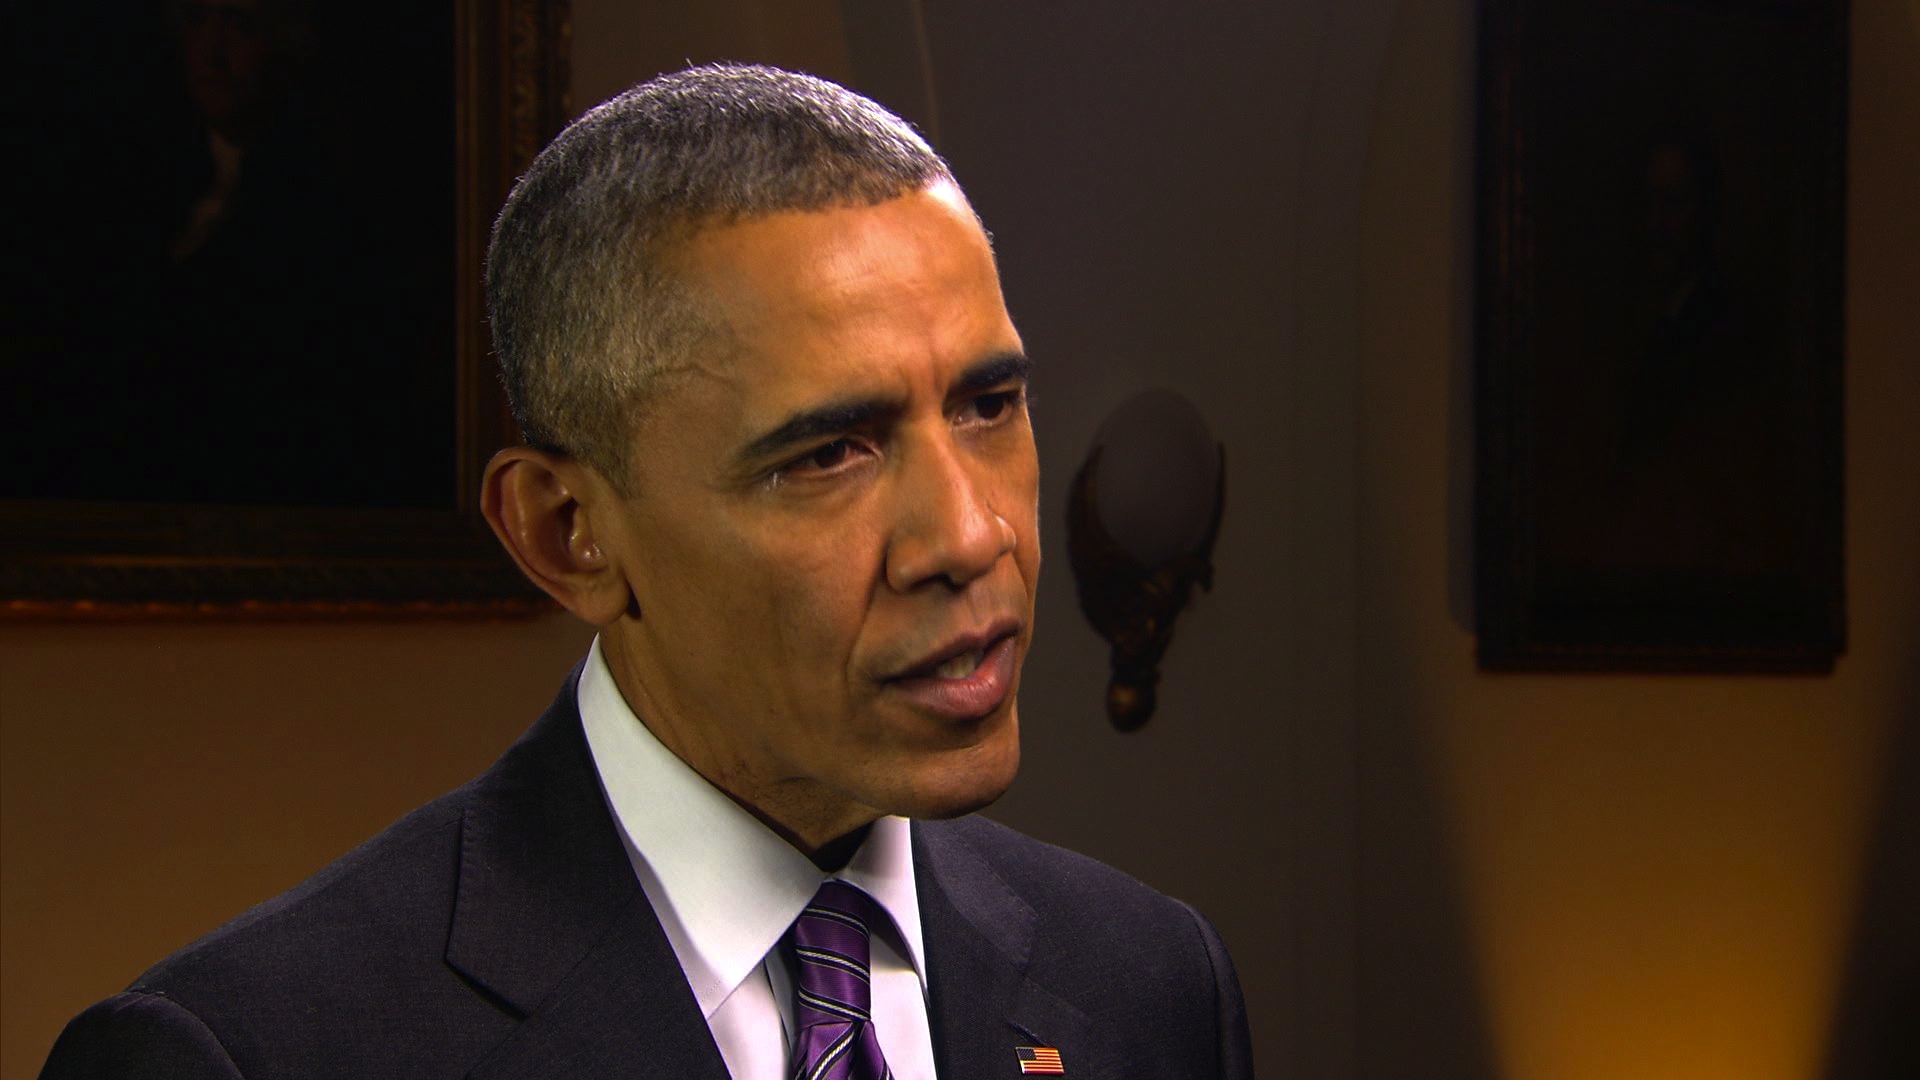 President Obama to visit with families of San Bernardino victims - CBS News1920 x 1080